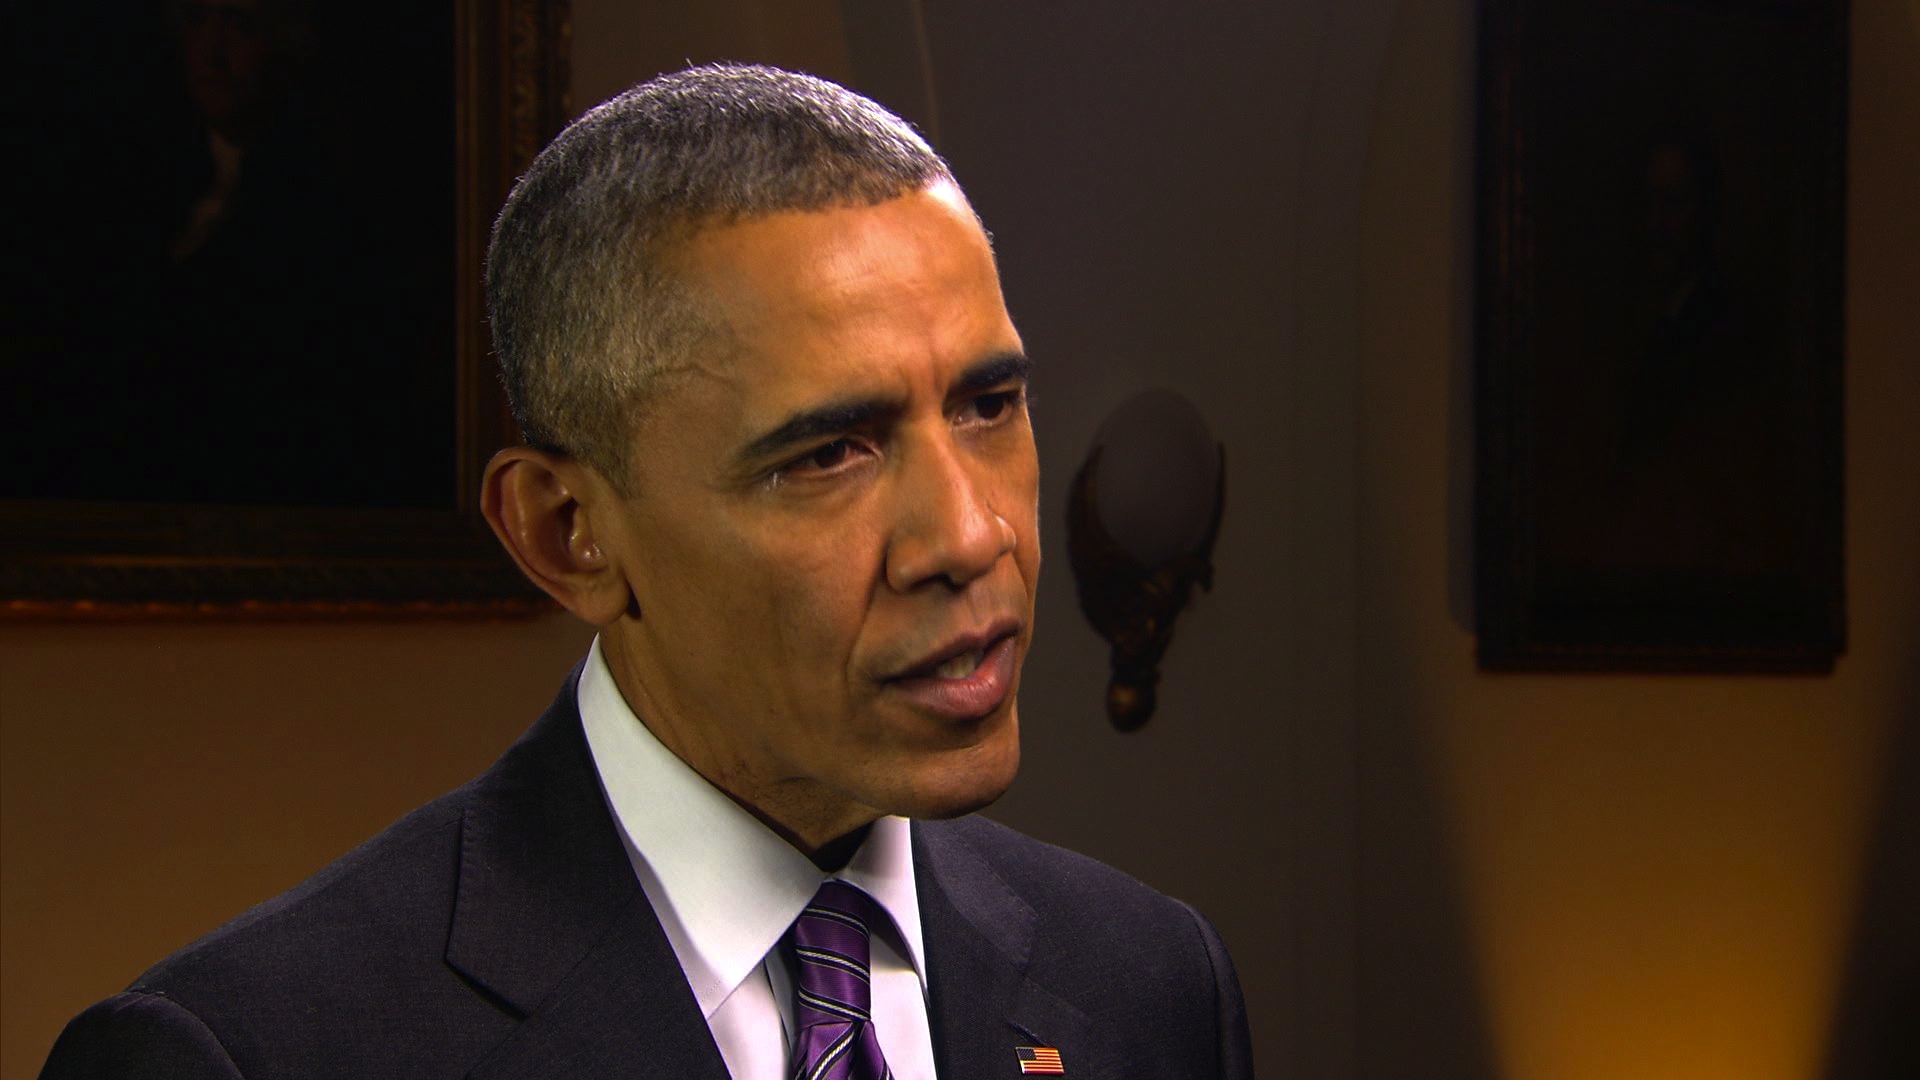 President Obama to visit with families of San Bernardino victims - CBS News1920 x 1080